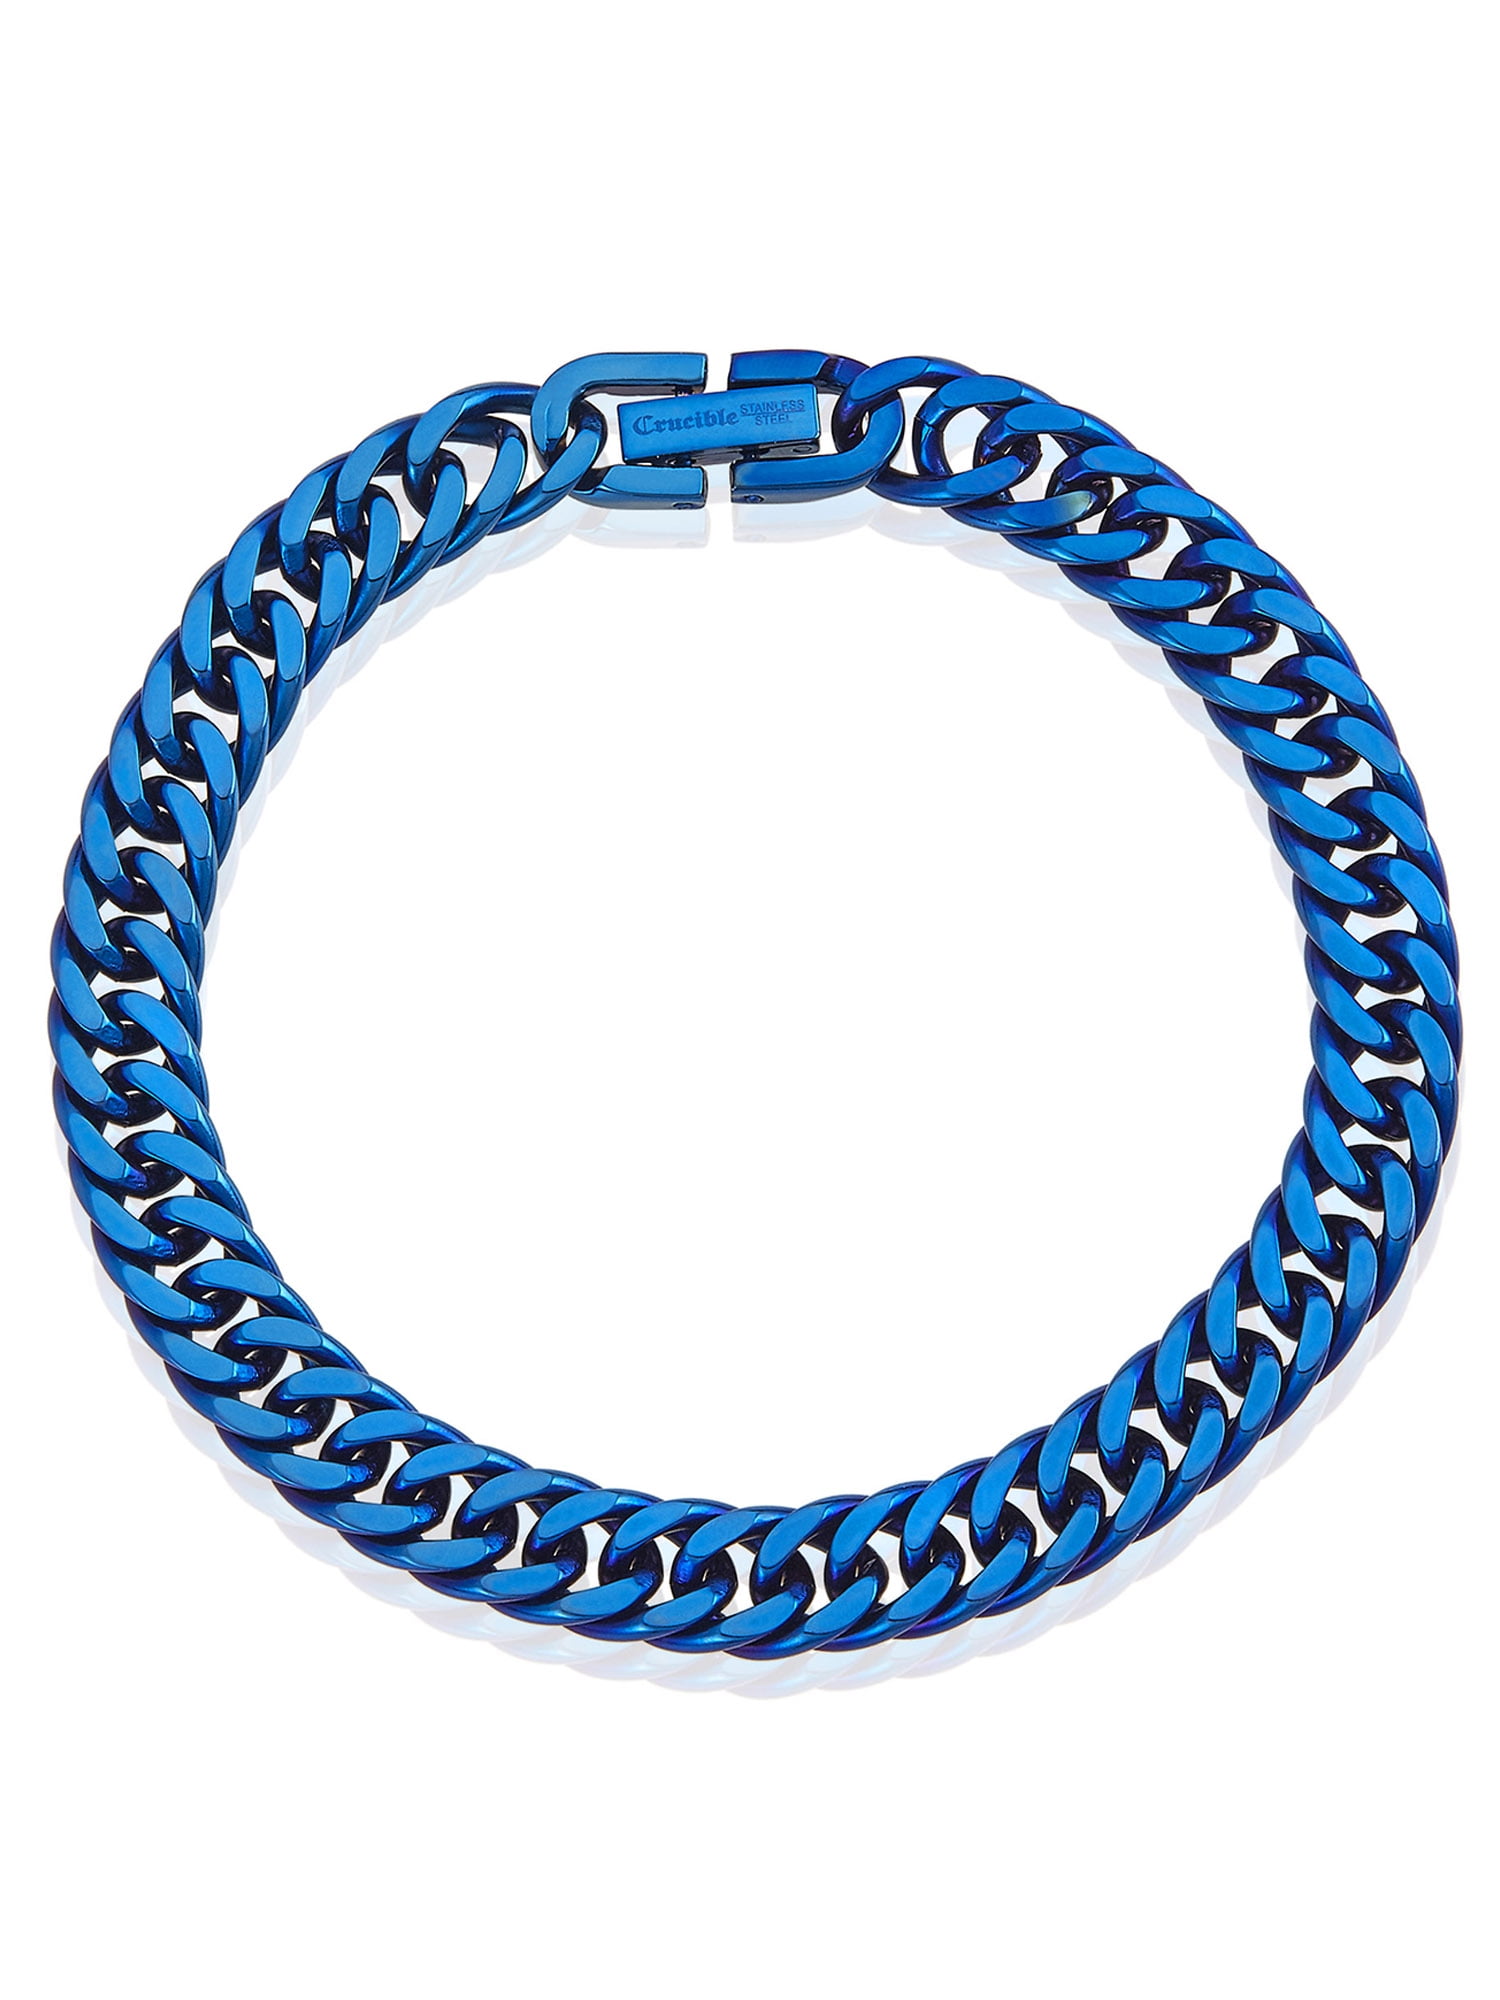 8mm Smooth Oval & Twist Round Chain Link Bracelet 6.0 / Darker Oxidized Finish